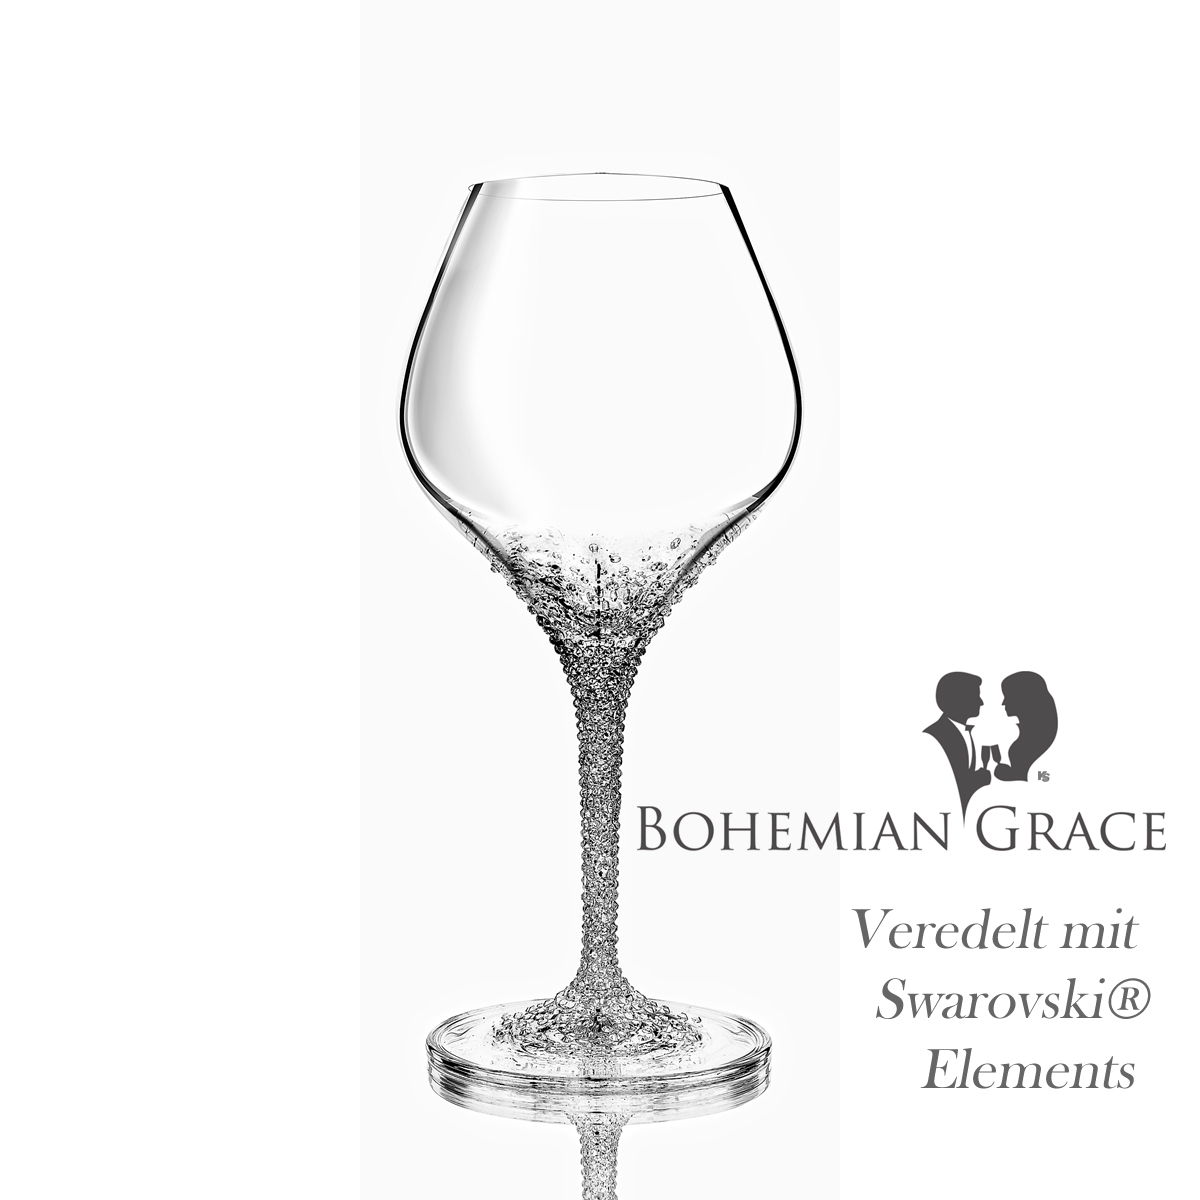 Weinglas 2Stk POSEIDON 280ml B. Grace - Weissweingläser POSEIDON 2Stk, mit Swarovski Elements